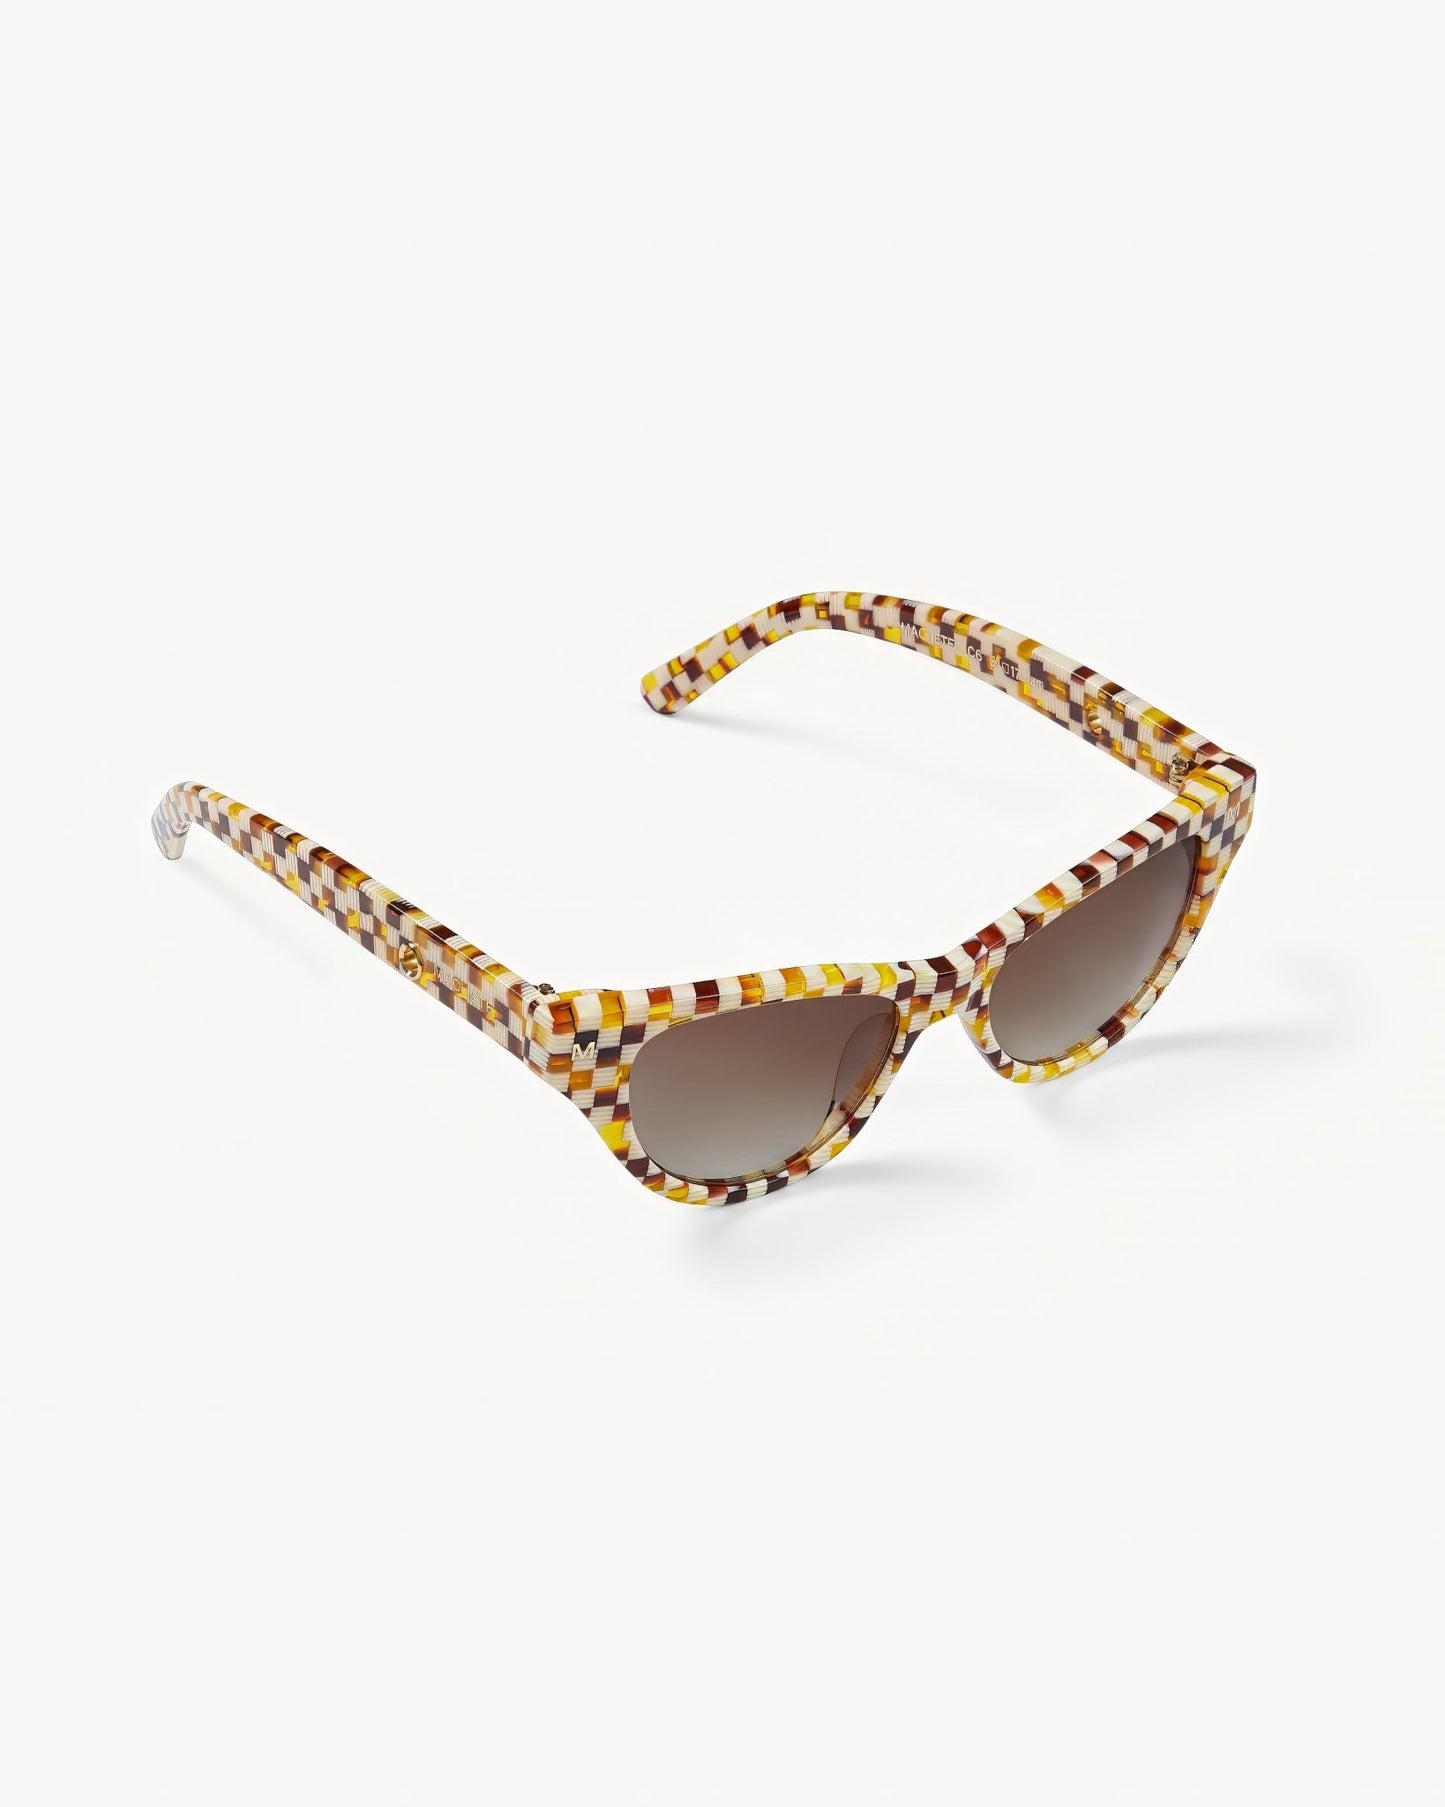 MACHETE Suzy Sunglasses in Tortoise Checker